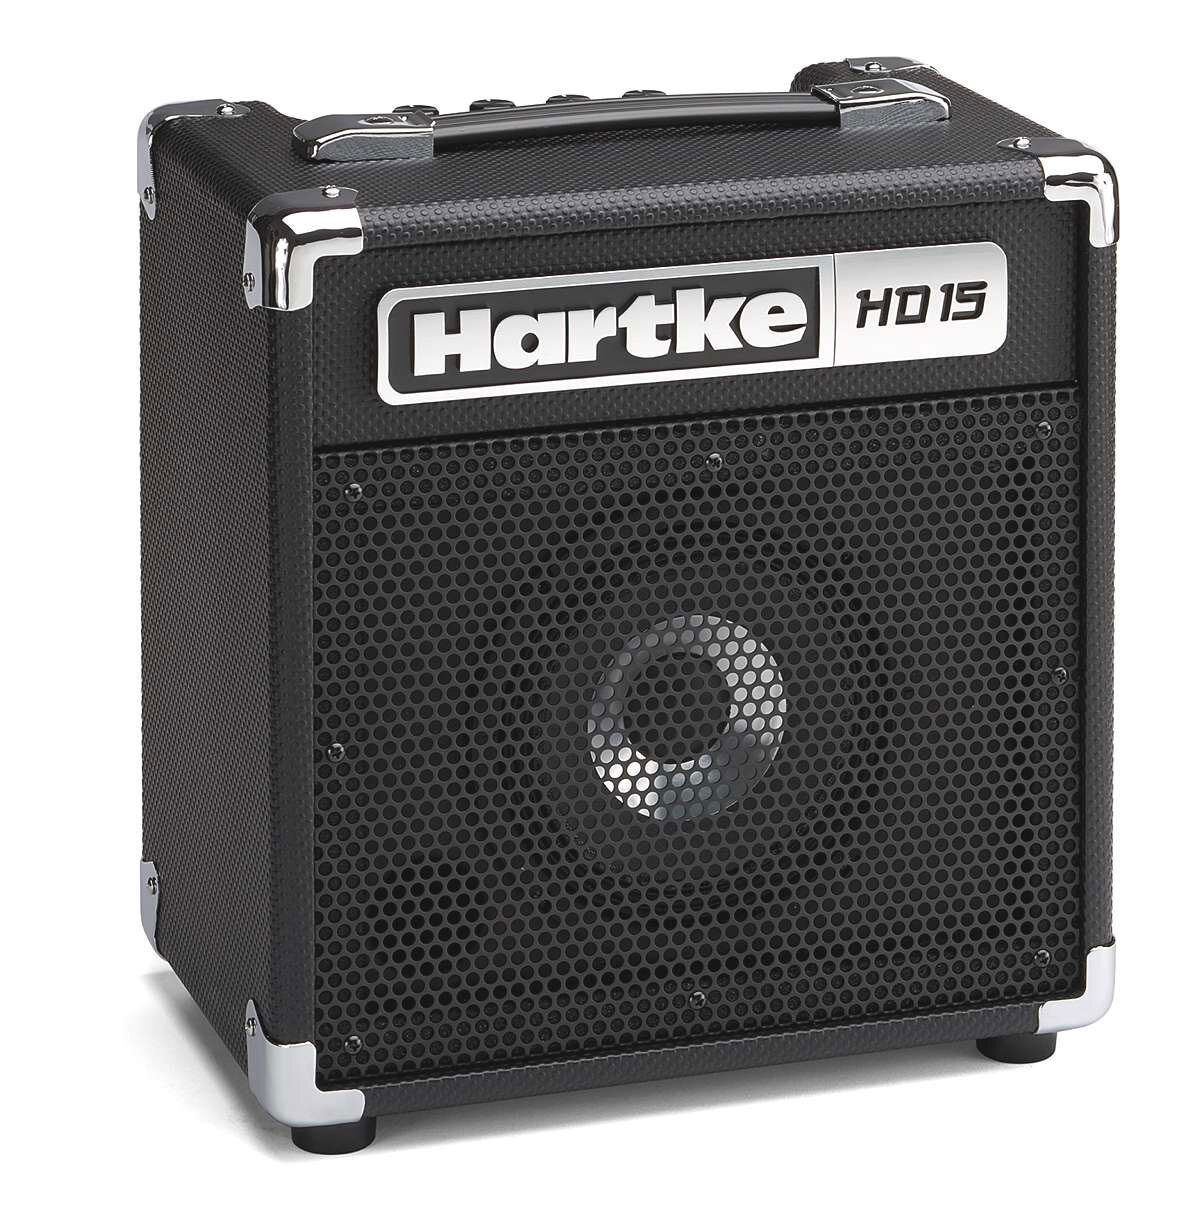 Hartke HD15 6.5